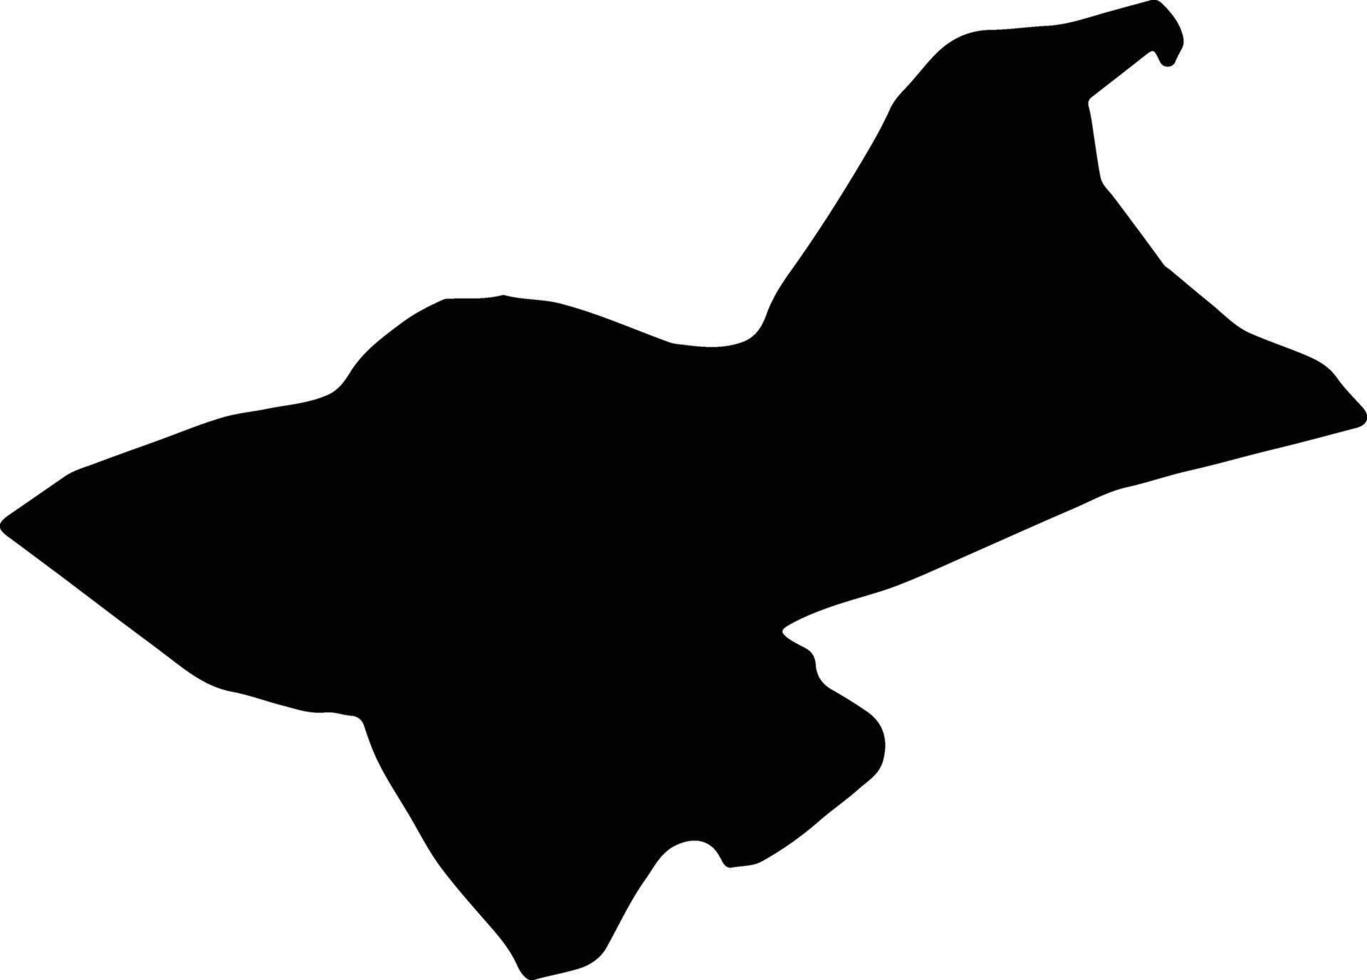 manubah tunisia silhouette carta geografica vettore